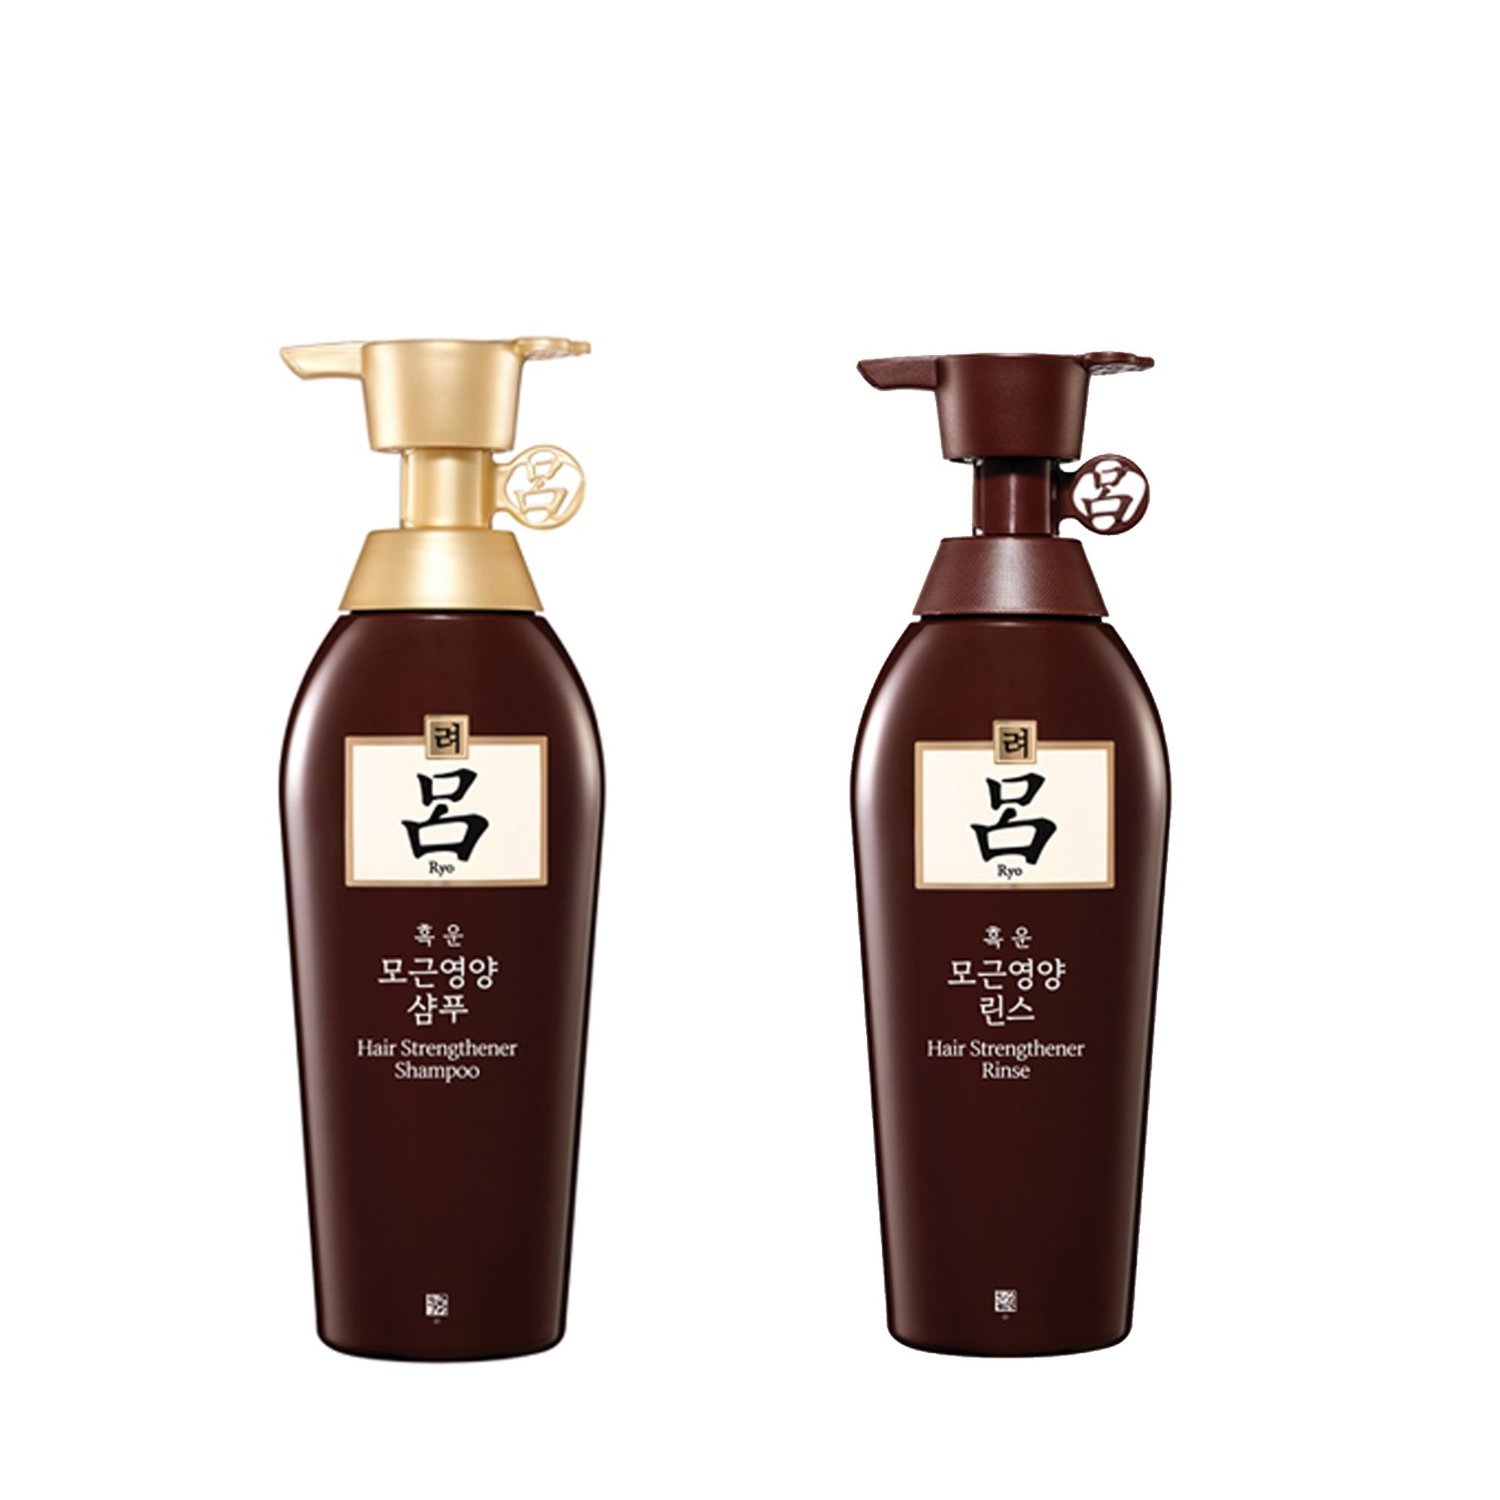 Шампунь корея купить. Ryo hair Strengthener Shampoo, 500ml. Корейский шампунь jeongzan. Аюнче шампунь Корея. Nak корейский шампунь.